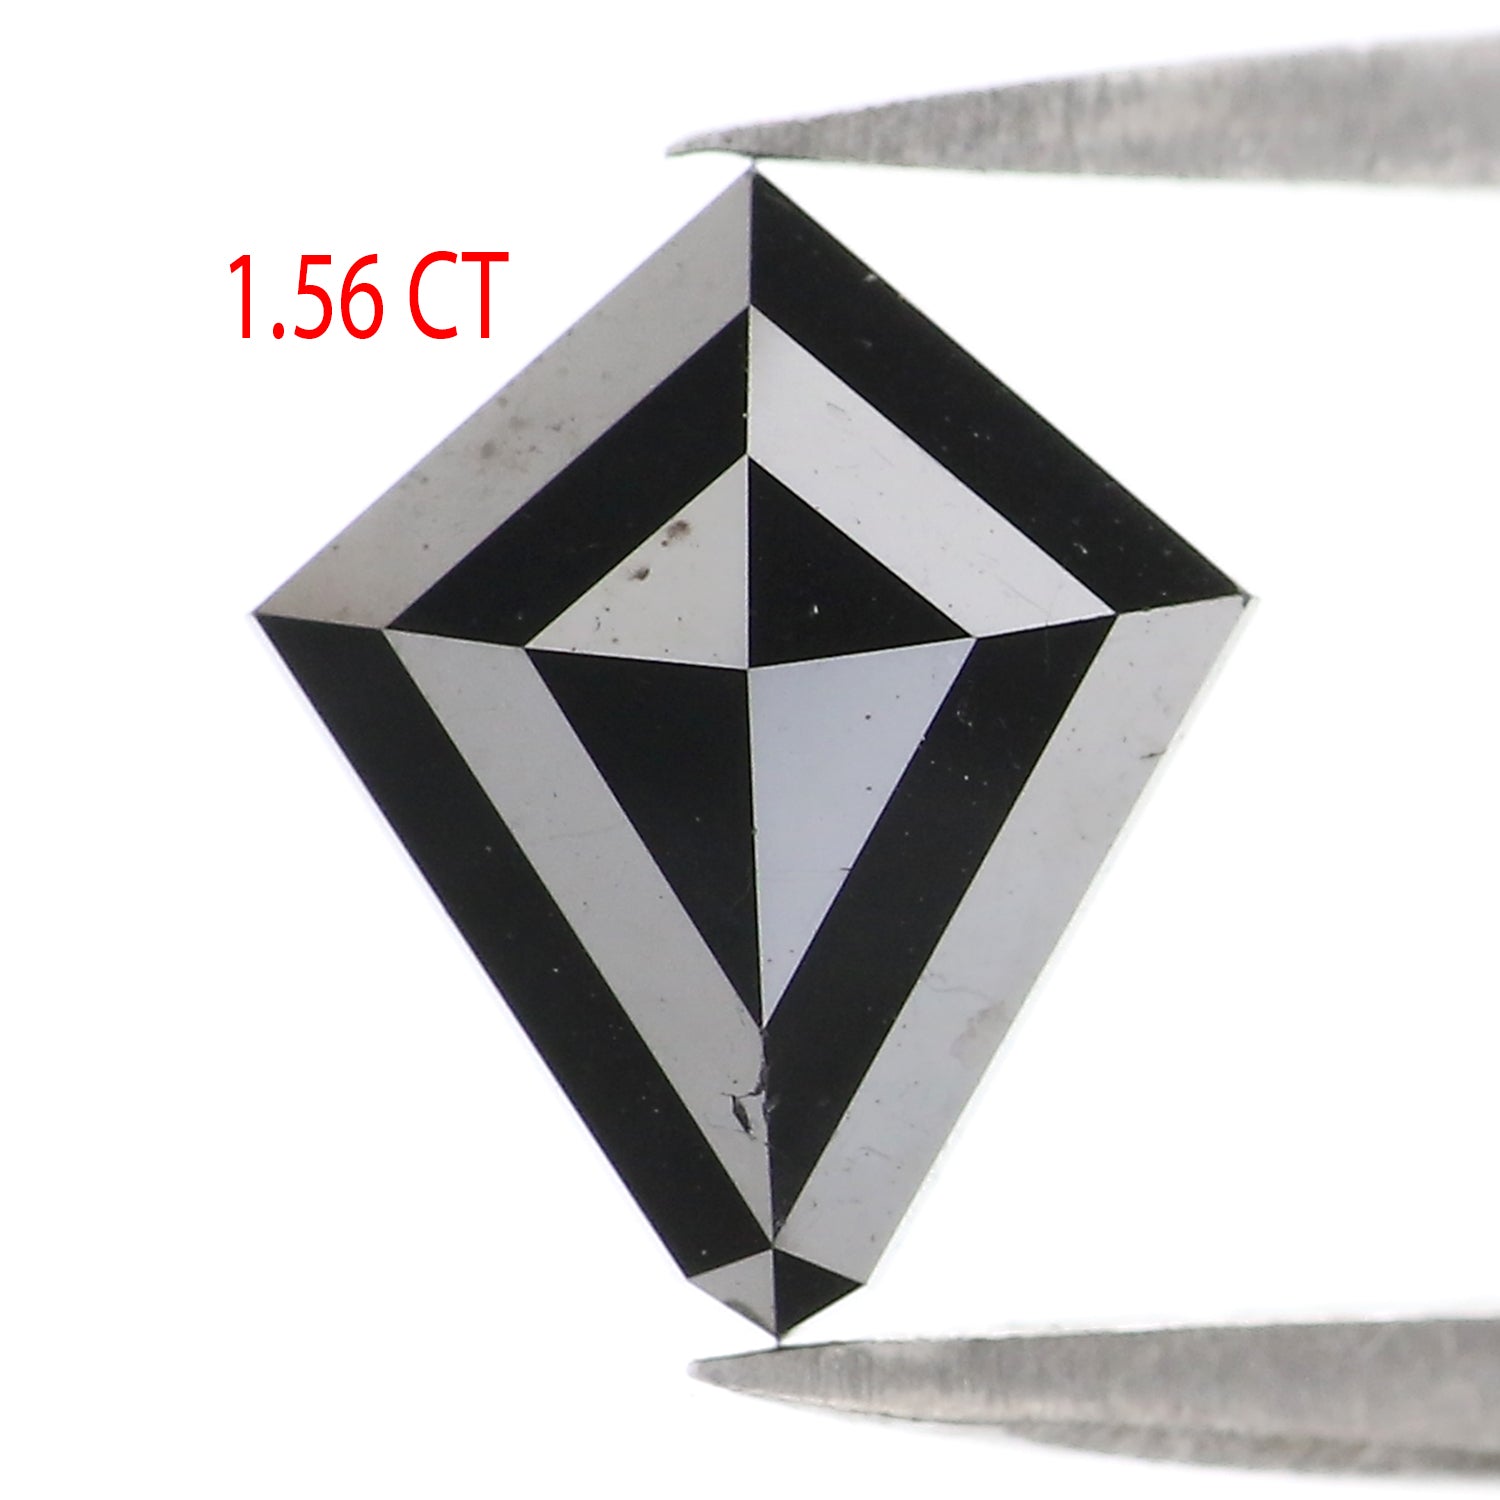 1.56 Ct Natural Loose Kite Shape Diamond Black Color Kite Shape Diamond 9.30 MM Natural Loose Black Diamond Kite Rose Cut Diamond KQ2615